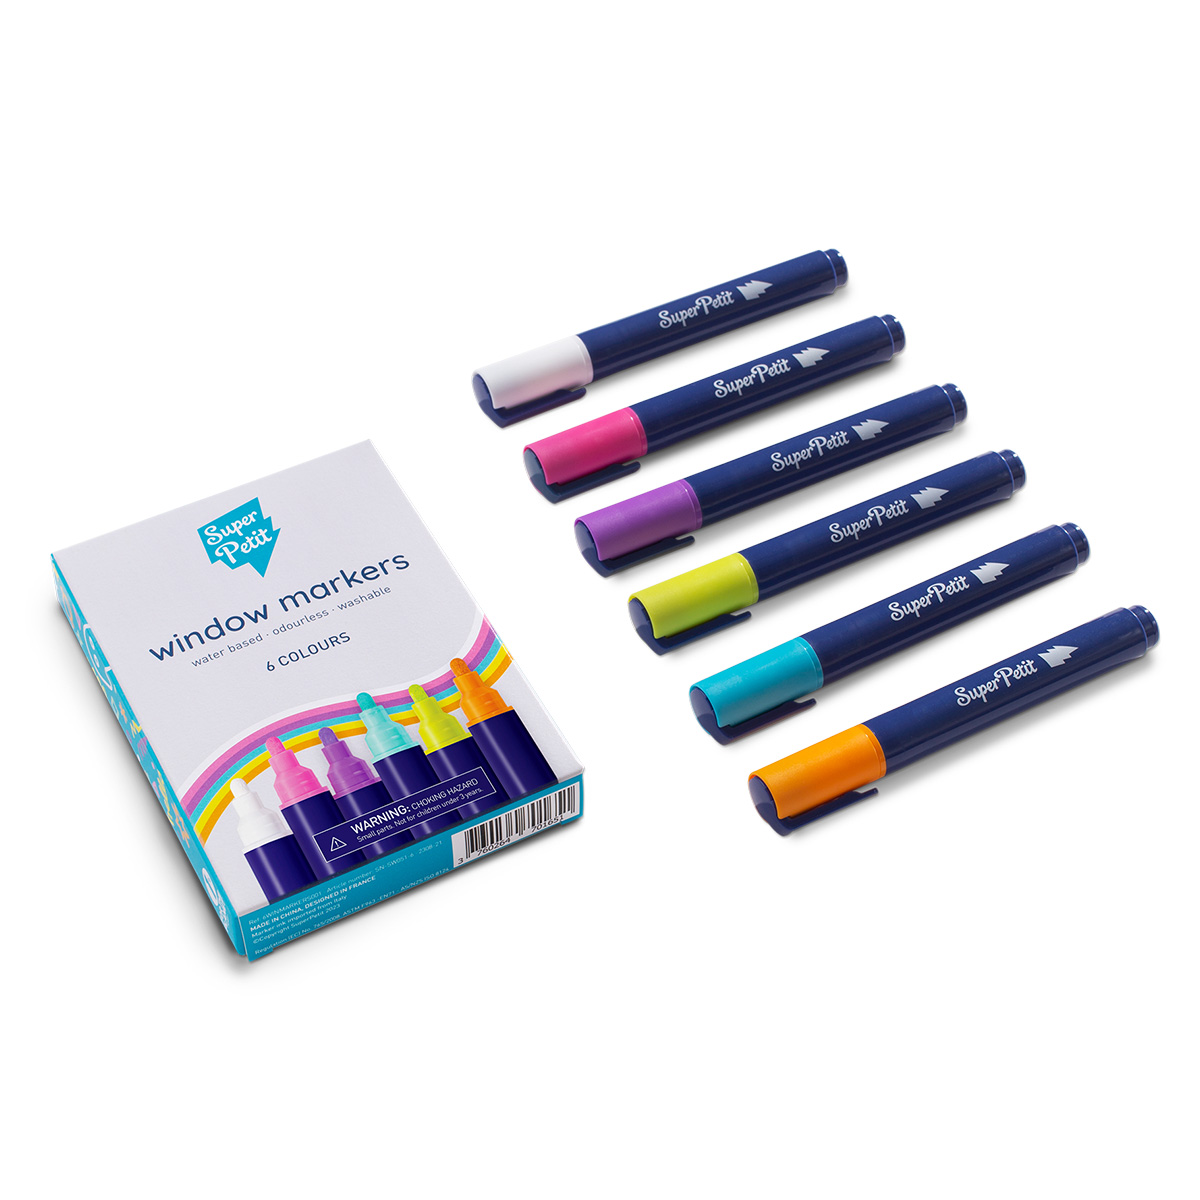 6 crayons multicolores - loisirs créatifs - Djeco 